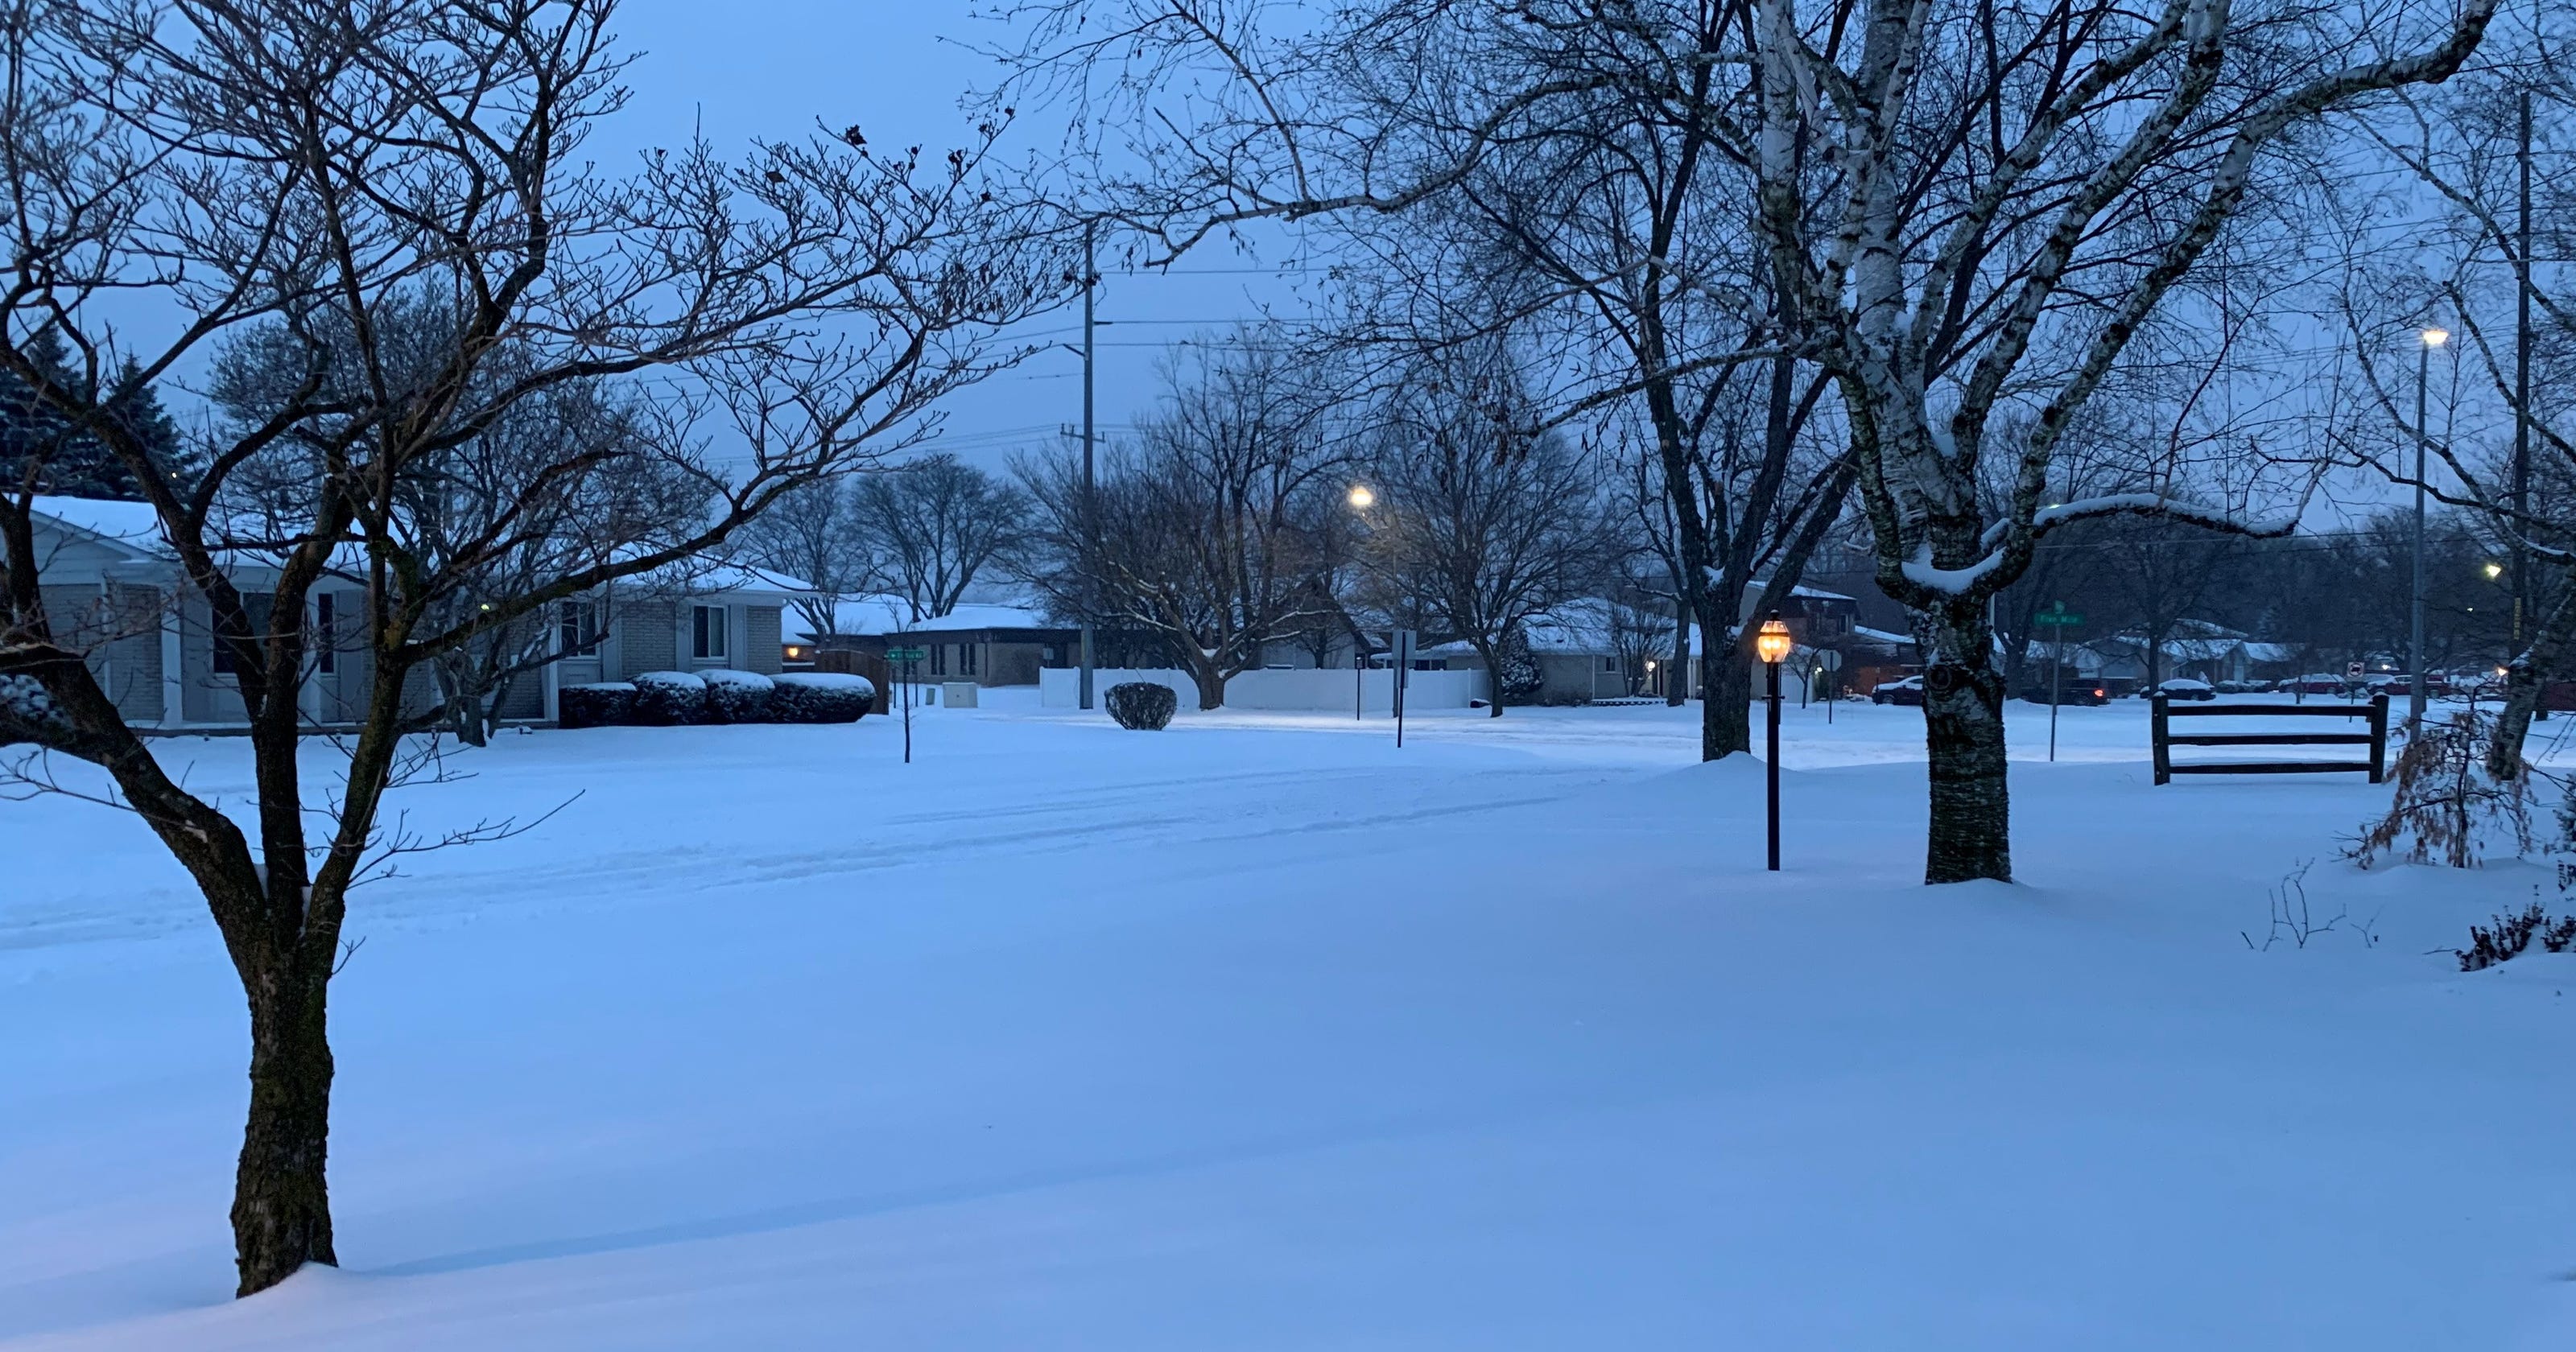 Michigan winter storm warning Snow rain, traffic updates